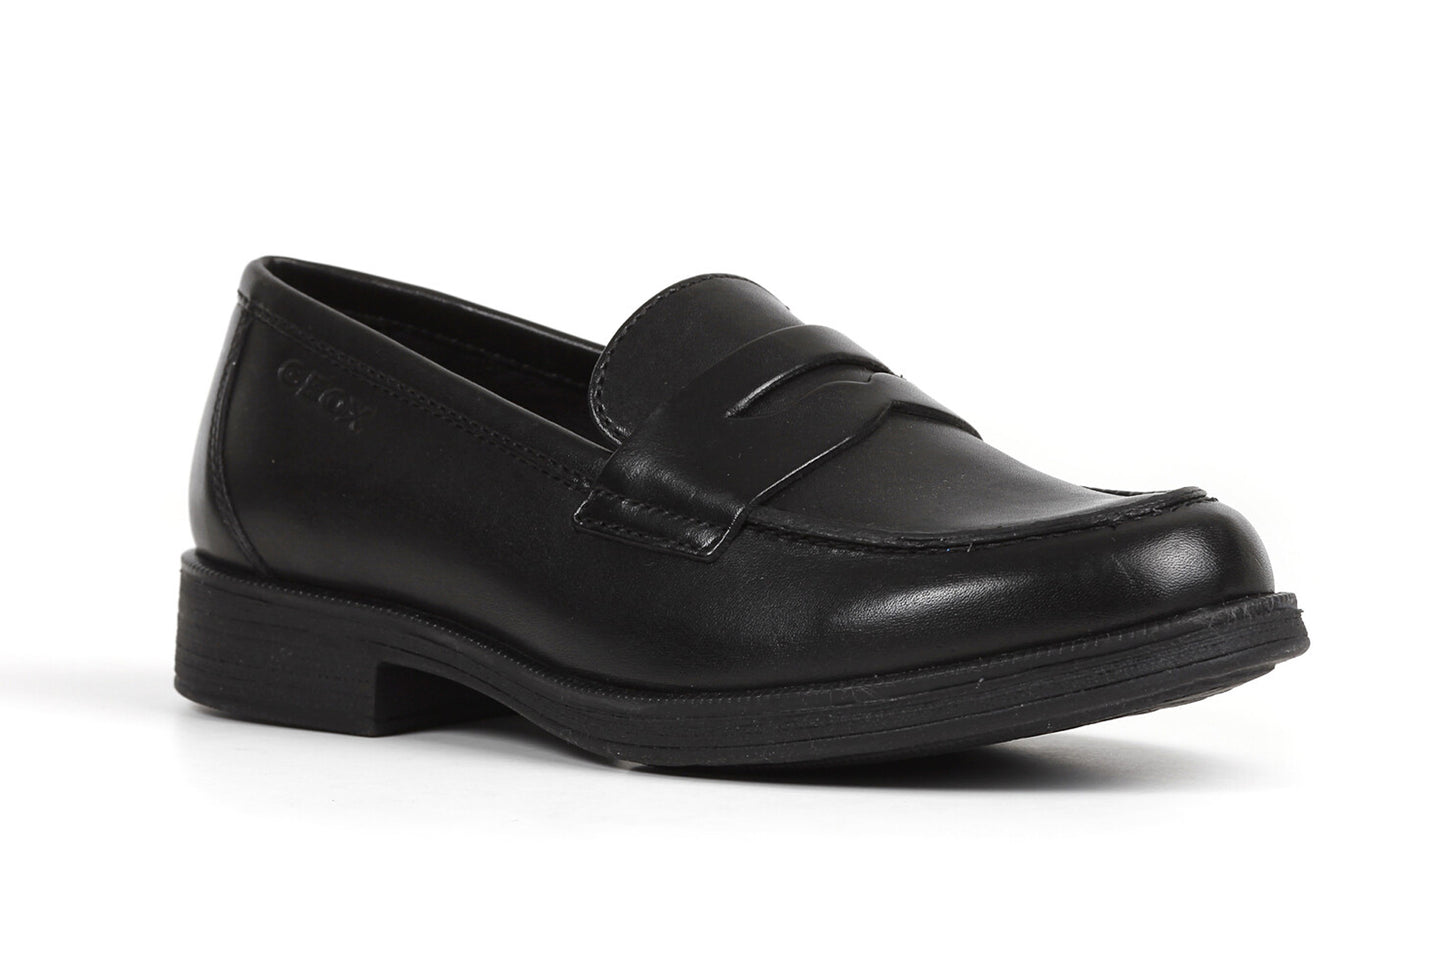 Agata Loafer Black Leather Girls School Shoe